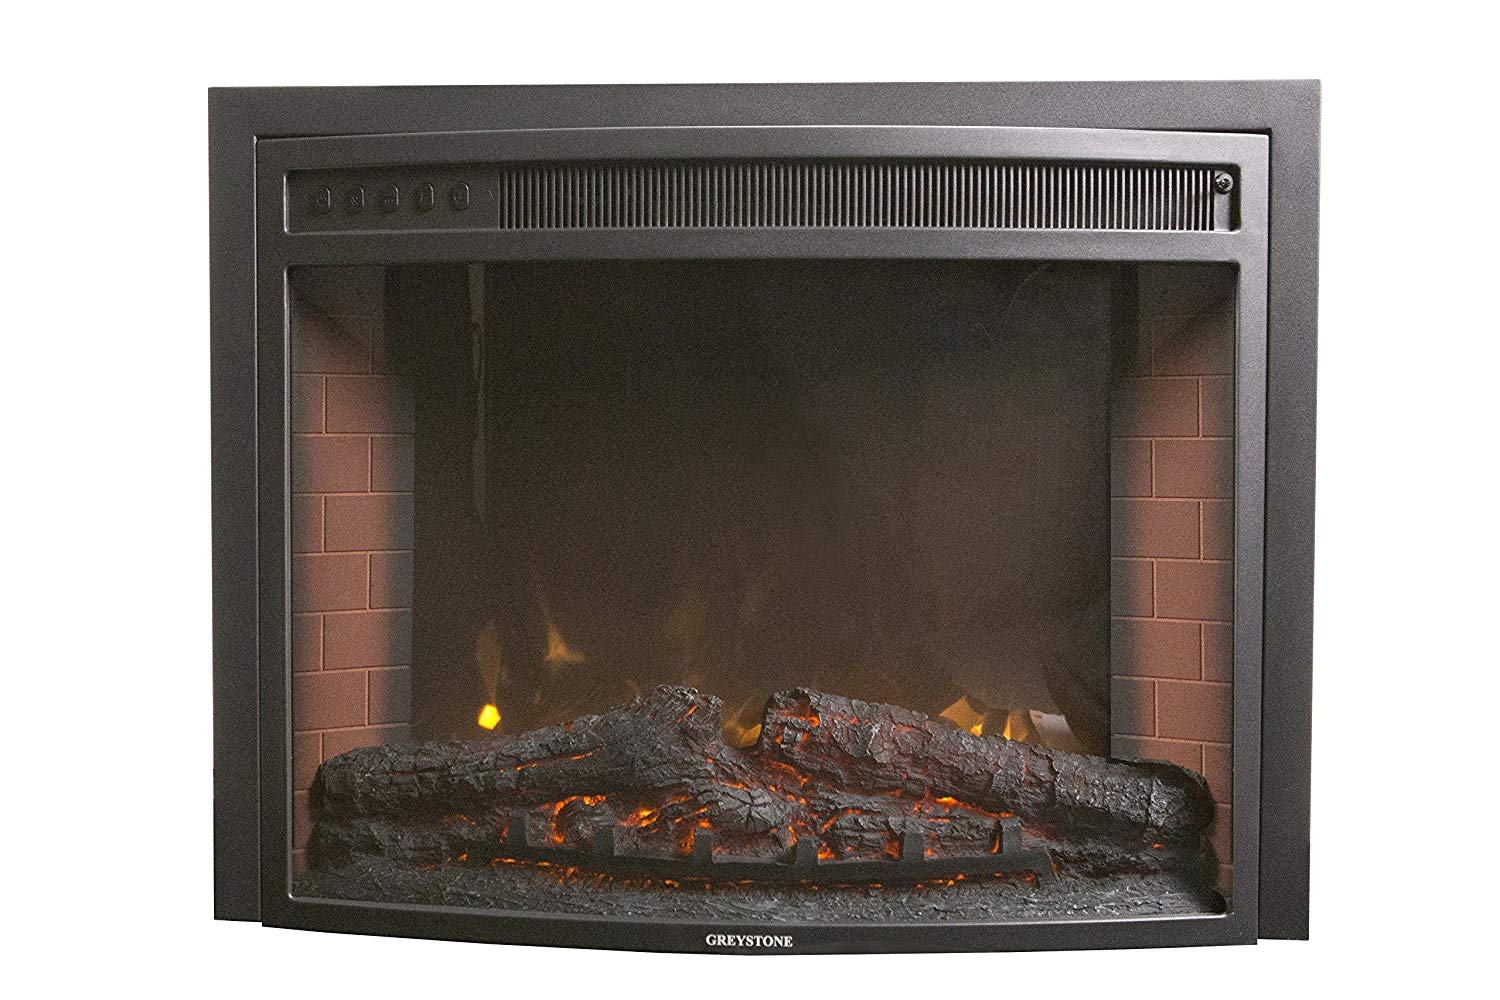 Greystone Electric Fireplace F2609e Amazon Com Greystone F2625 26 Curved Electrical Fireplace with